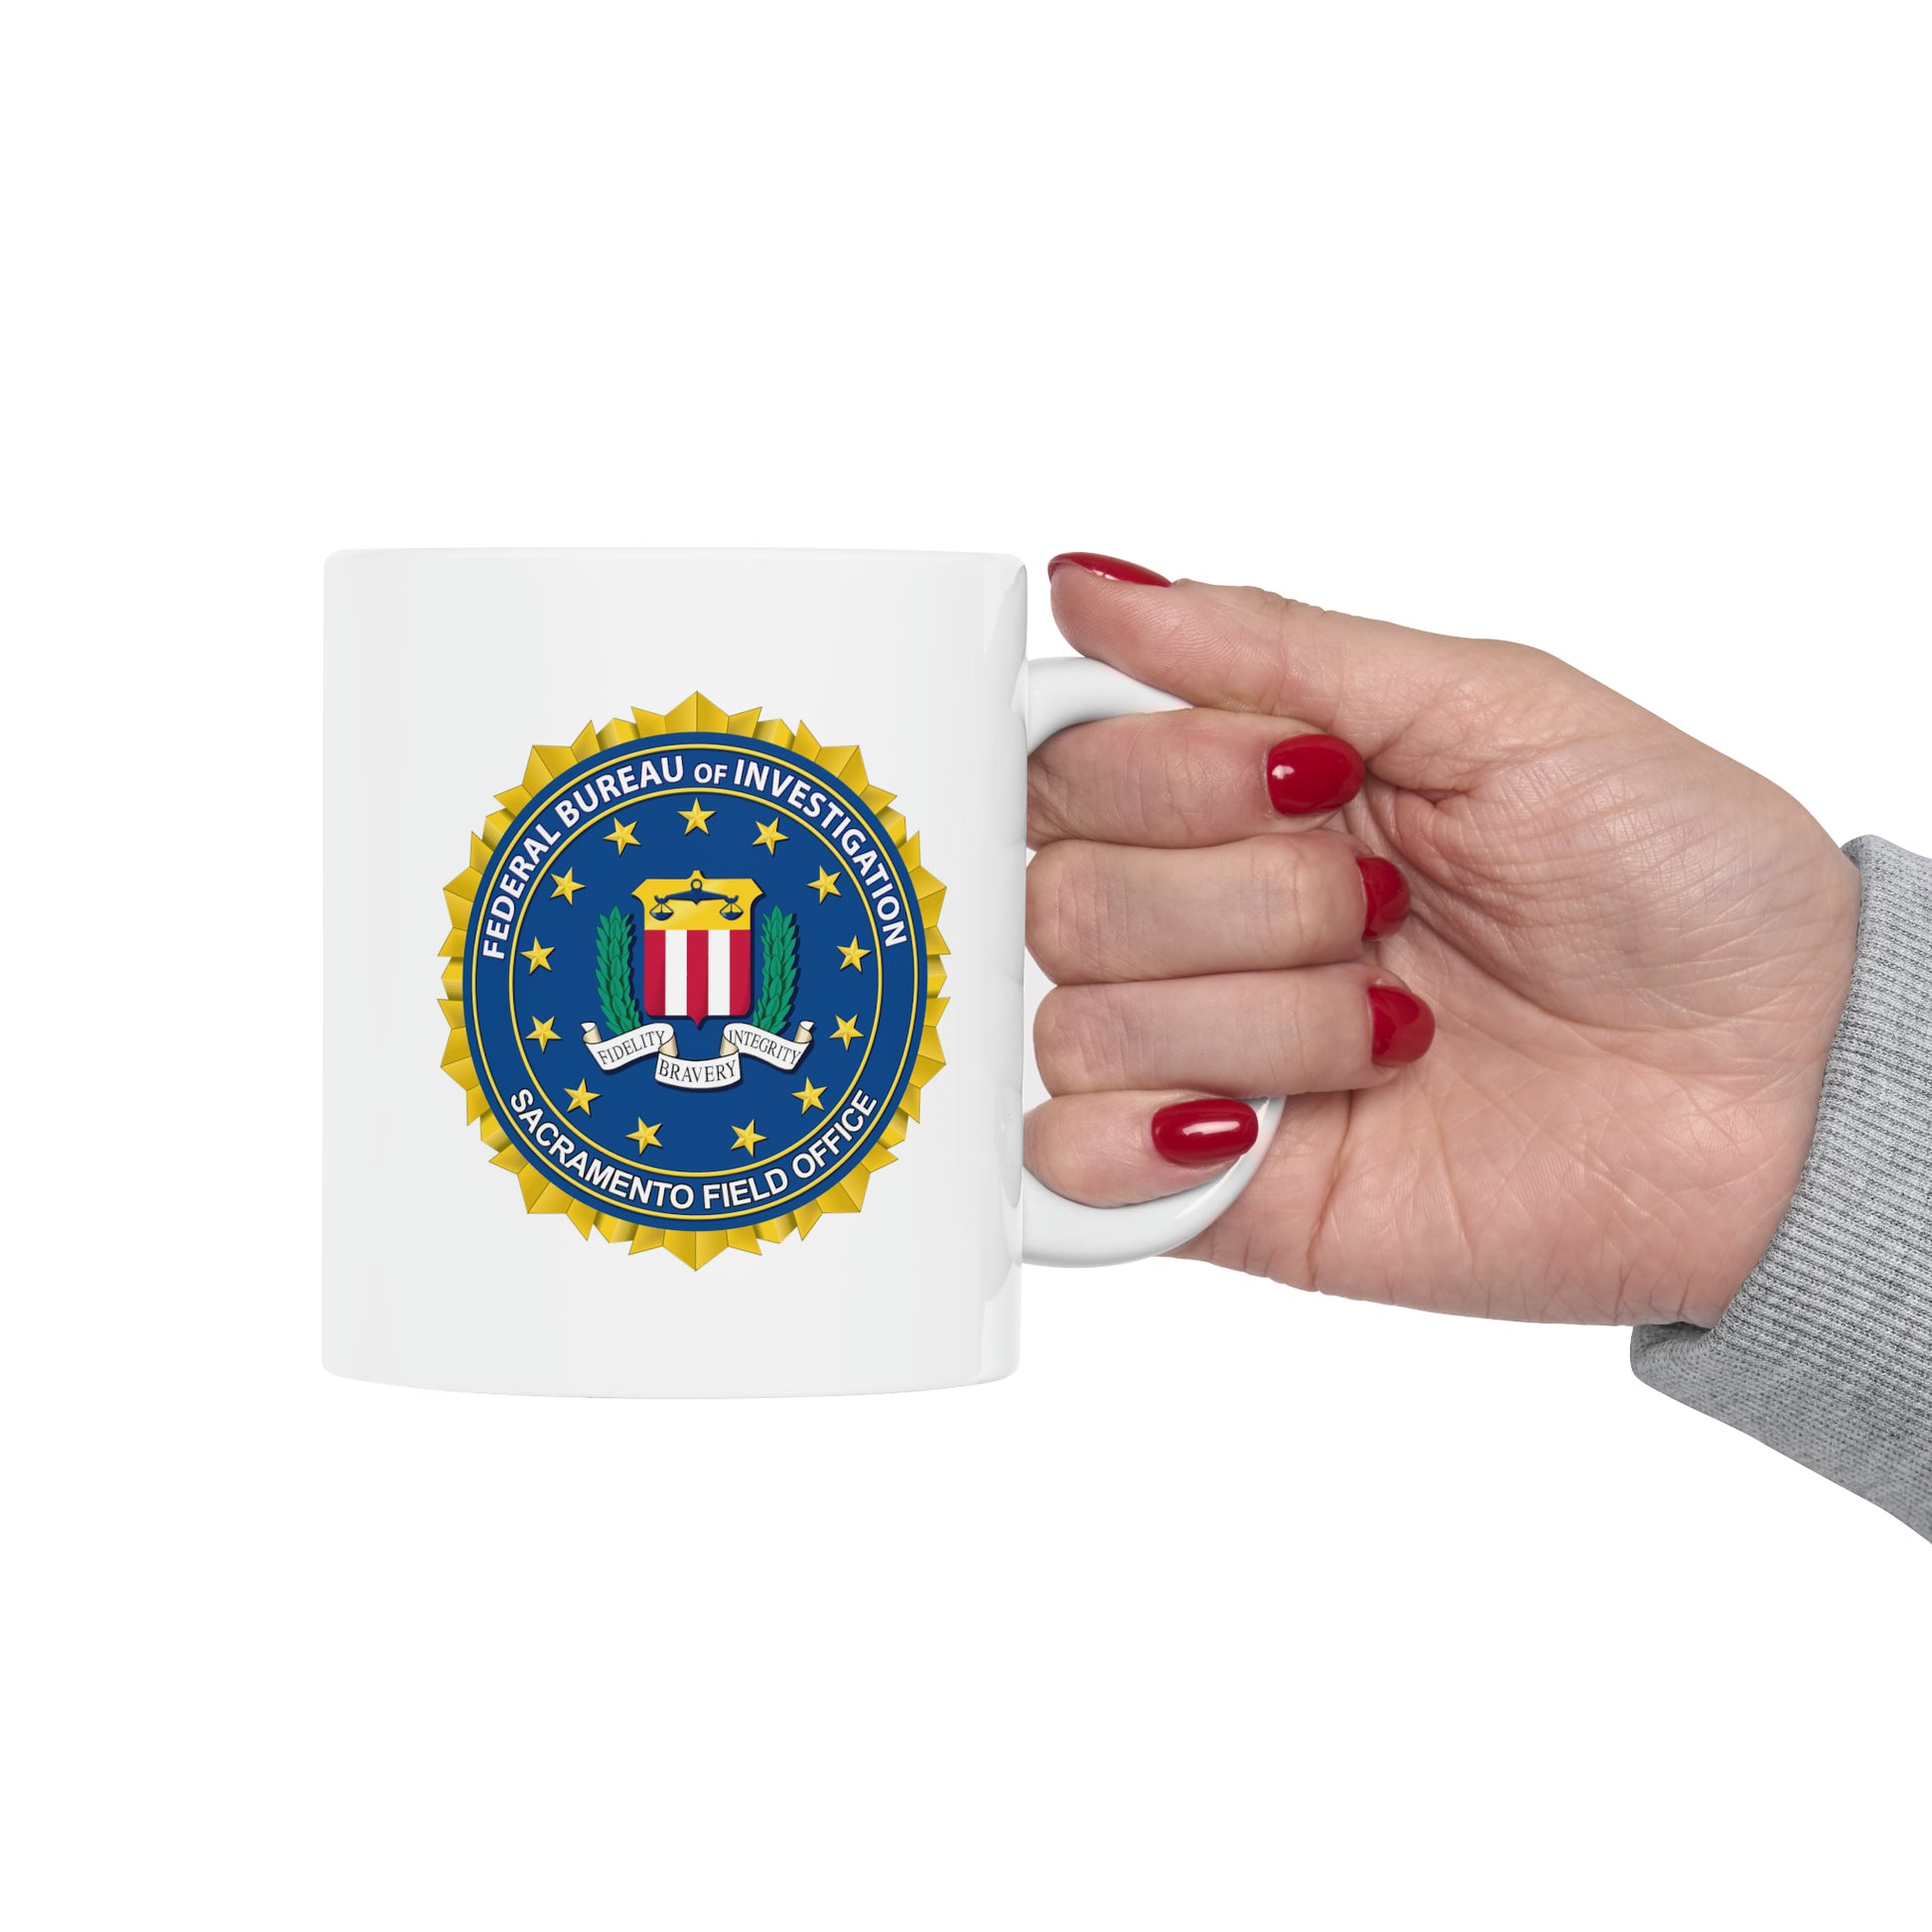 The FBI Sacramento Field Office Coffee Mug Custom Printed by TheGlassyLass.com